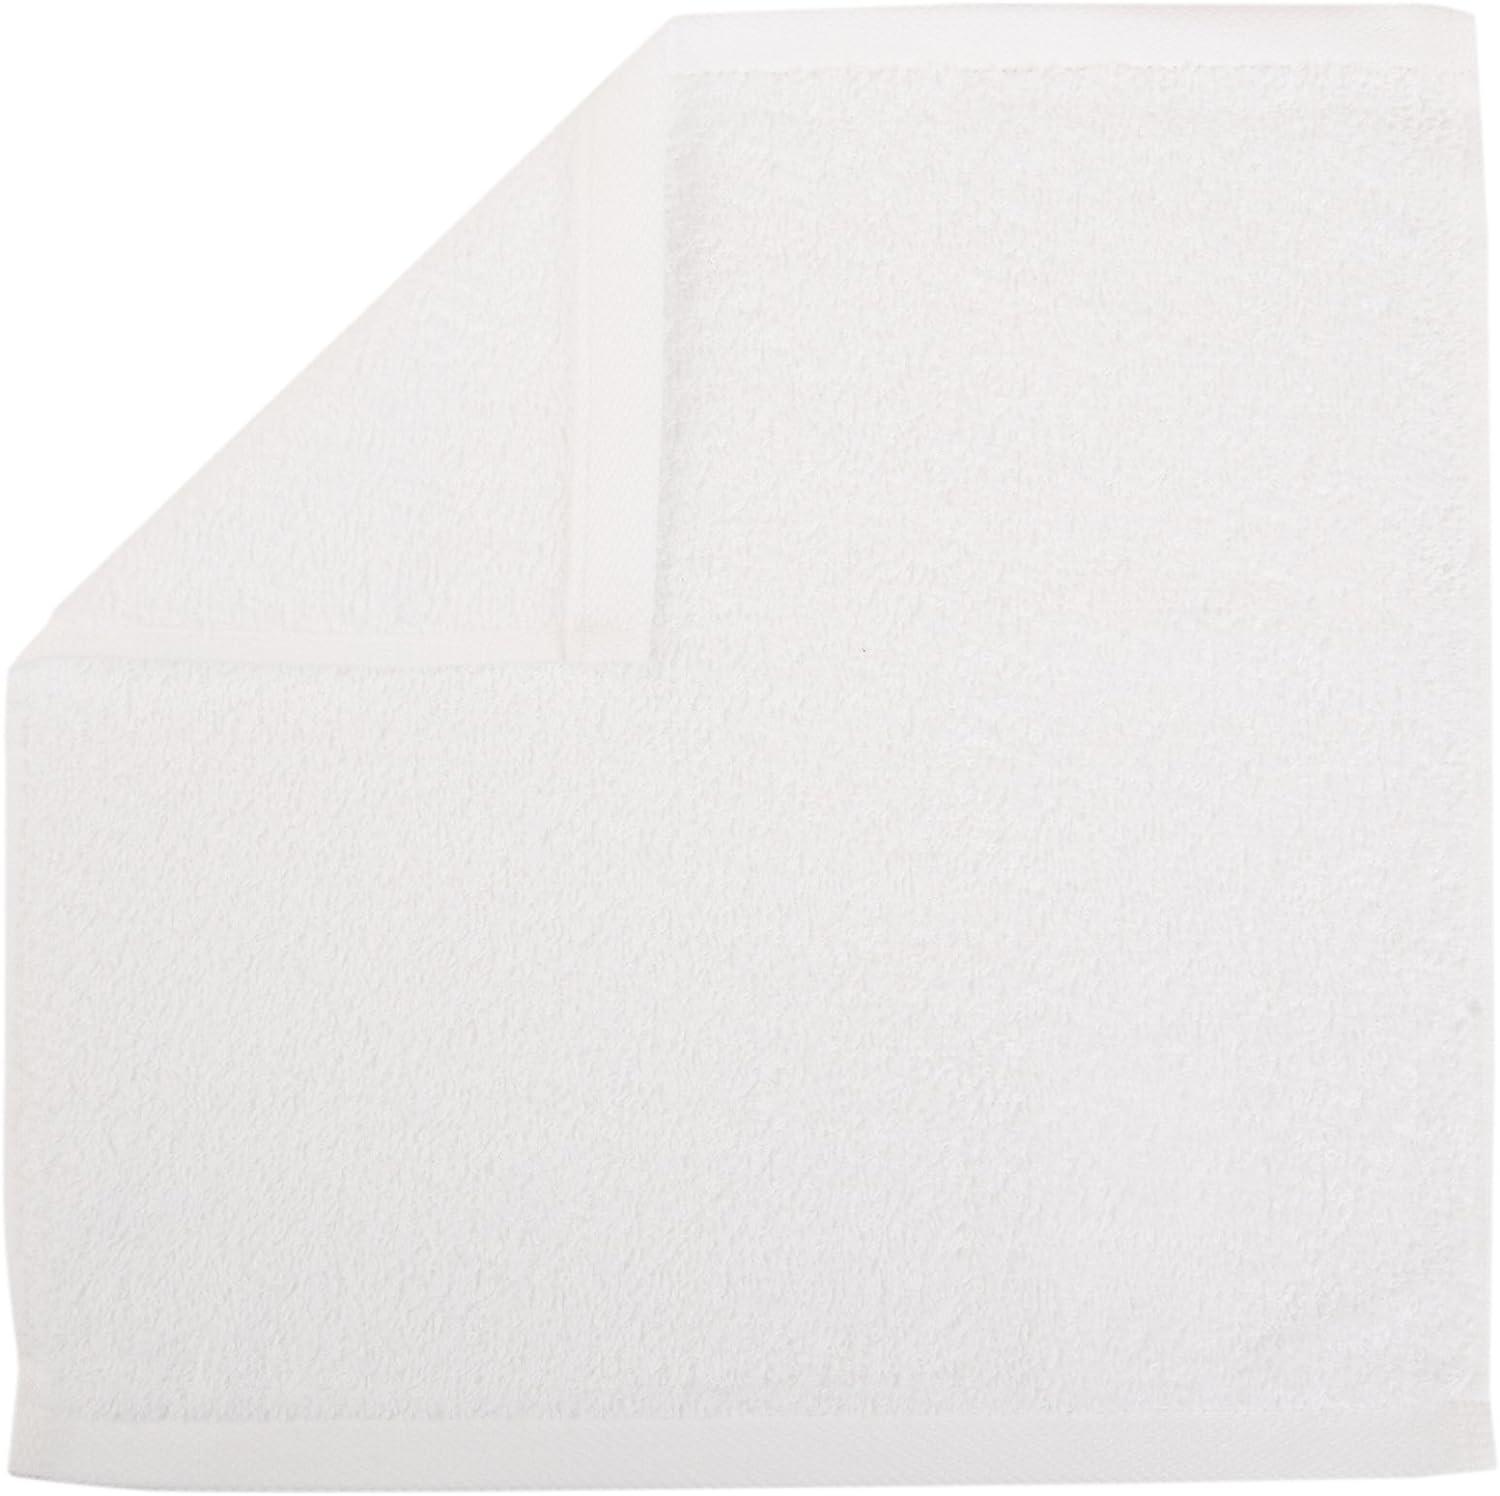 Basics Cotton Washcloths - 24-Pack - White